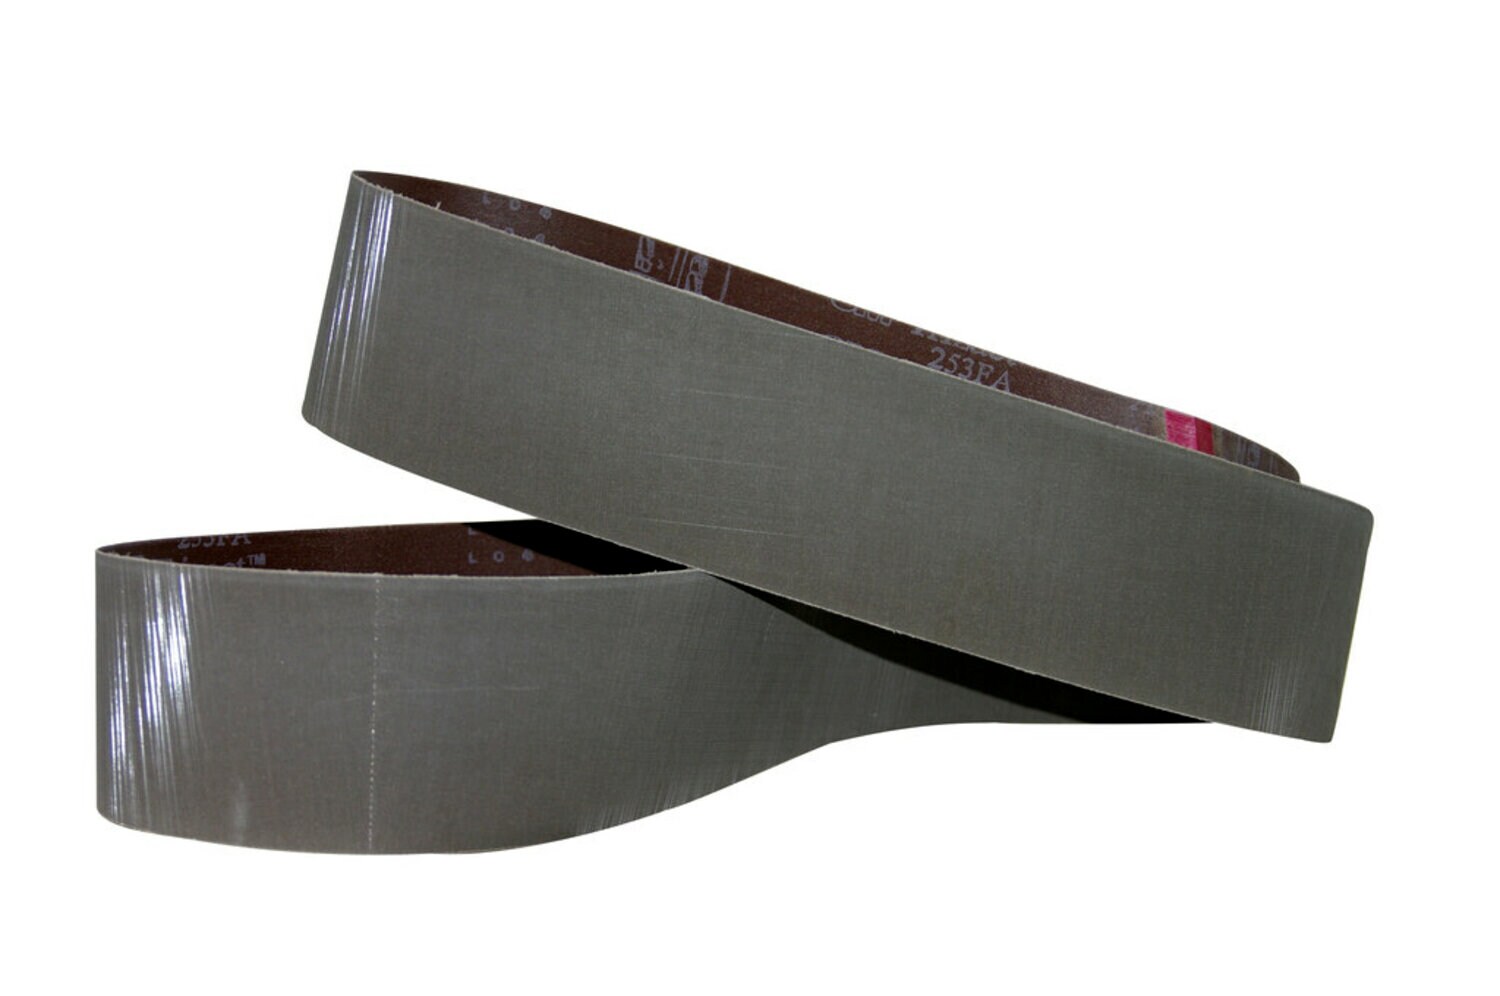 7000120274 - 3M Trizact Cloth Belt 253FA, A30 XF-weight, 19 in x 60 in, Film-lok,
Full-flex, 10 ea/Case